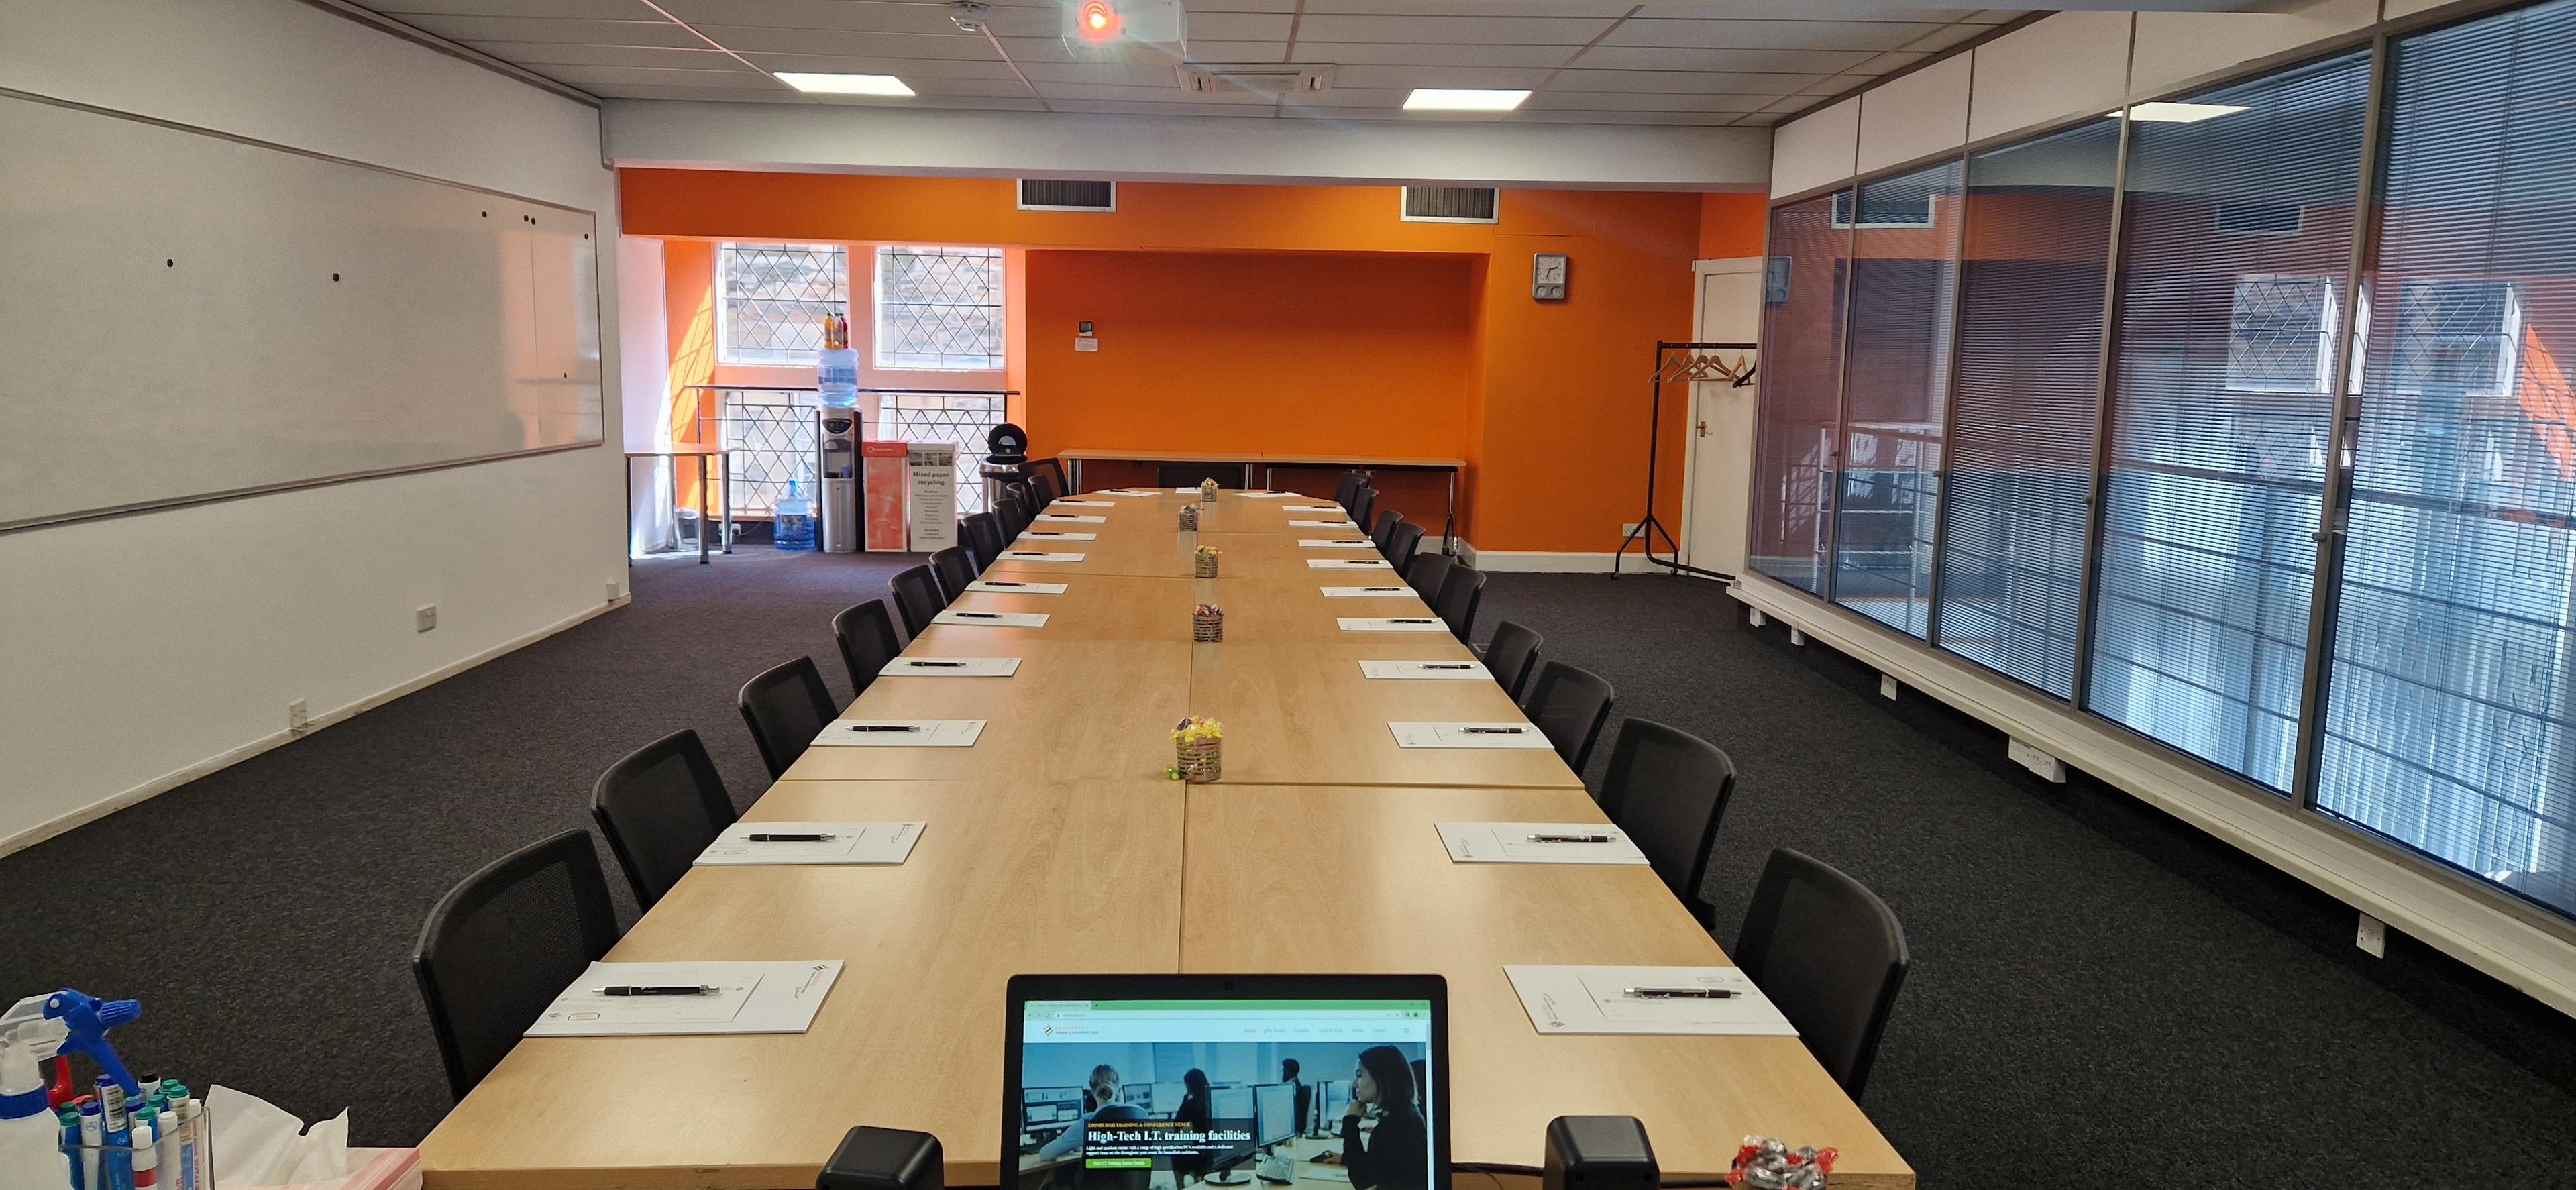 Edinburgh Training And Conference Venue, Hybrid Meeting Space photo #1